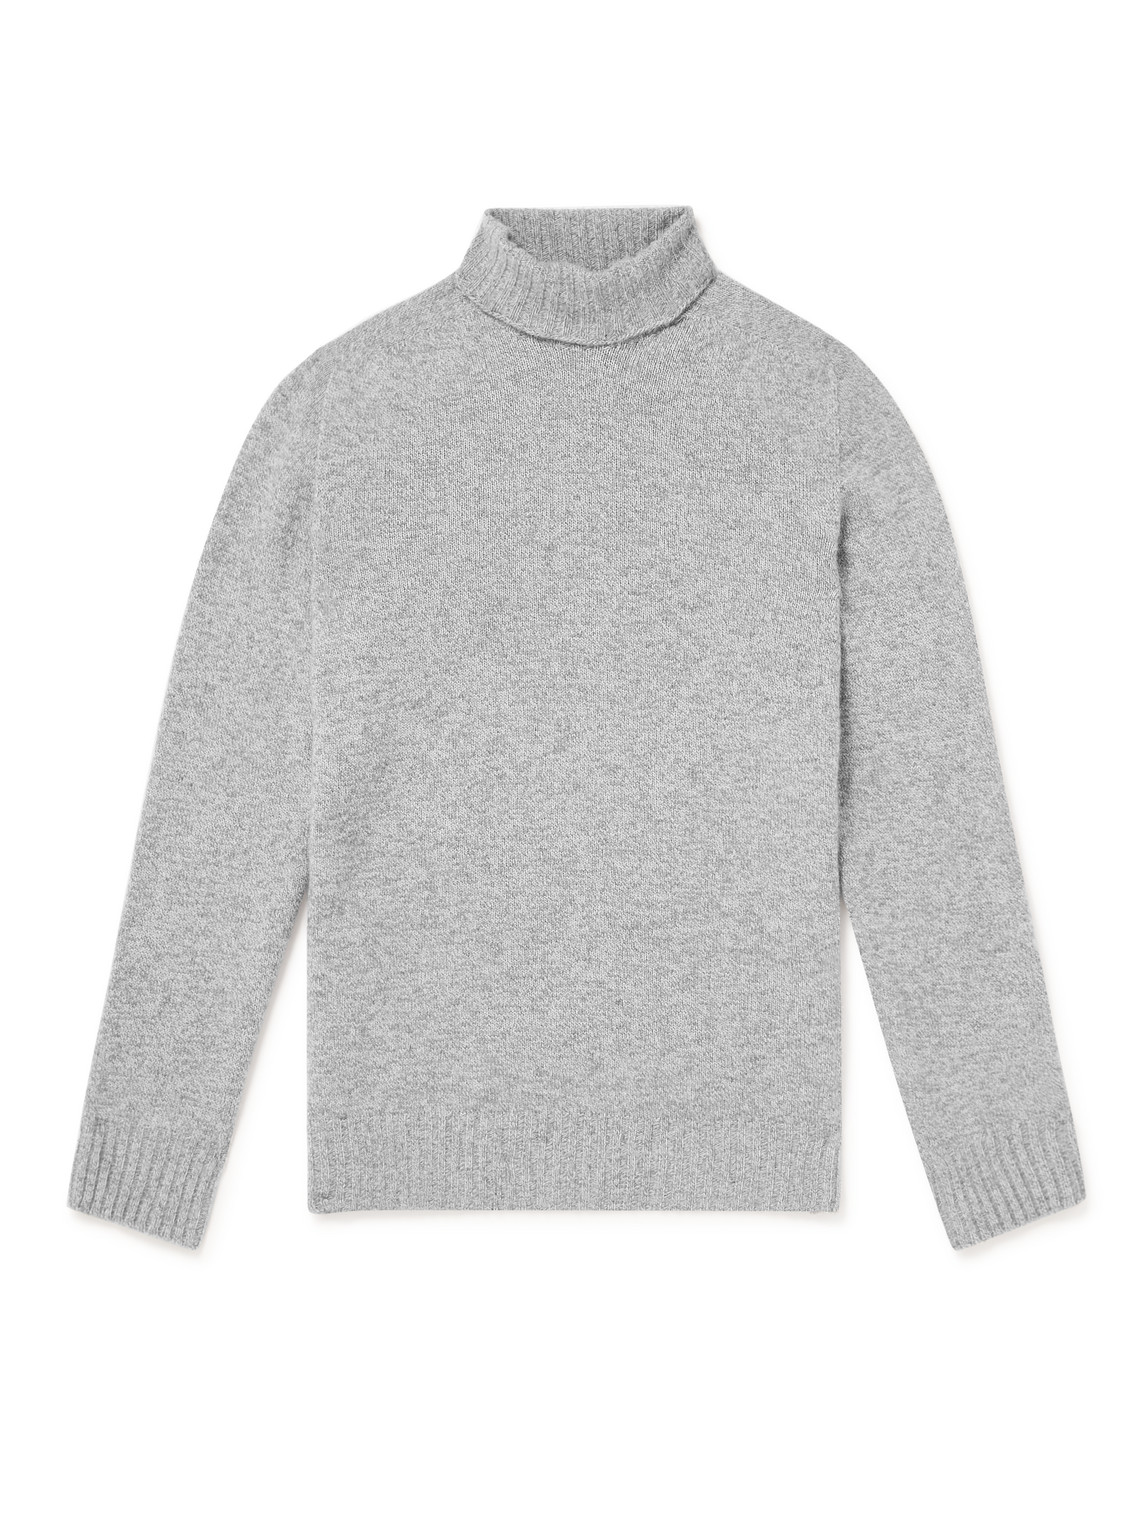 Officine Générale Merino Cashmere and Wool-Blend Turtleneck Sweater